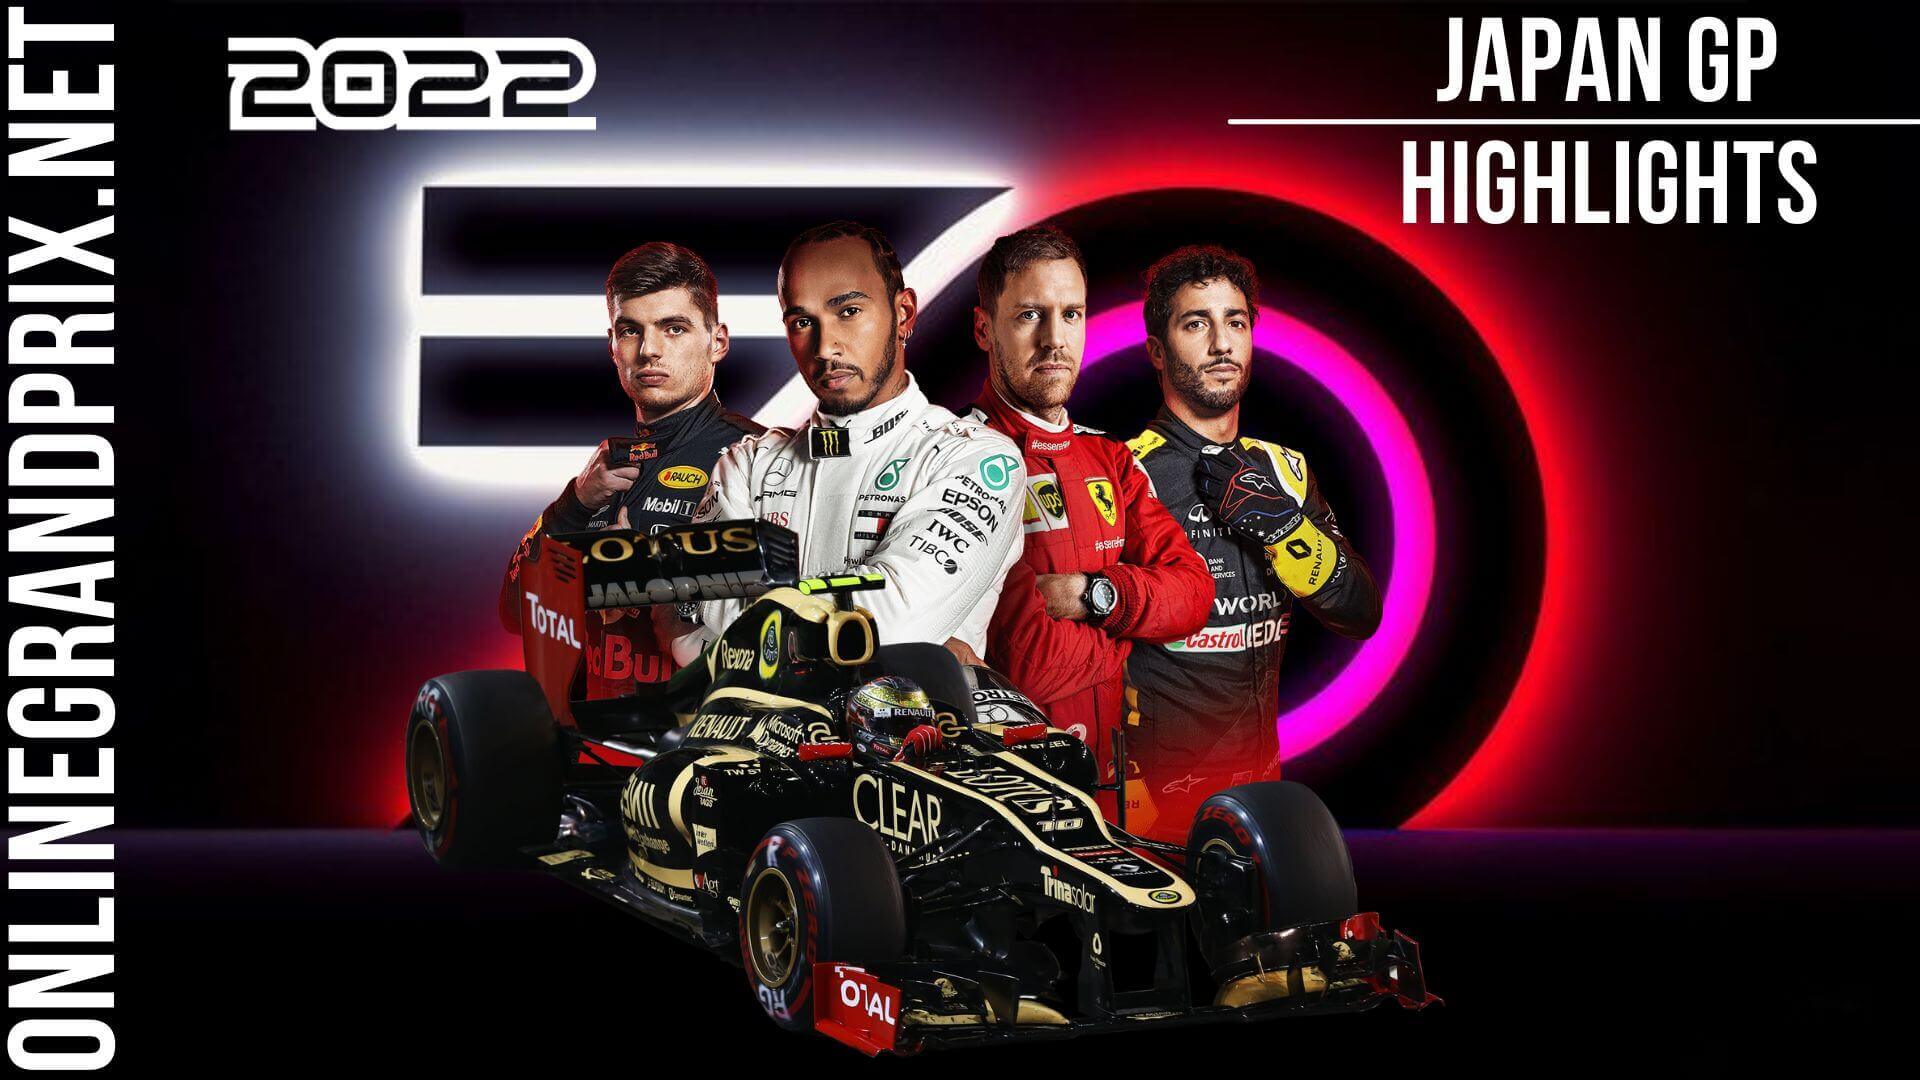 Japan GP F1 Highlights 2022